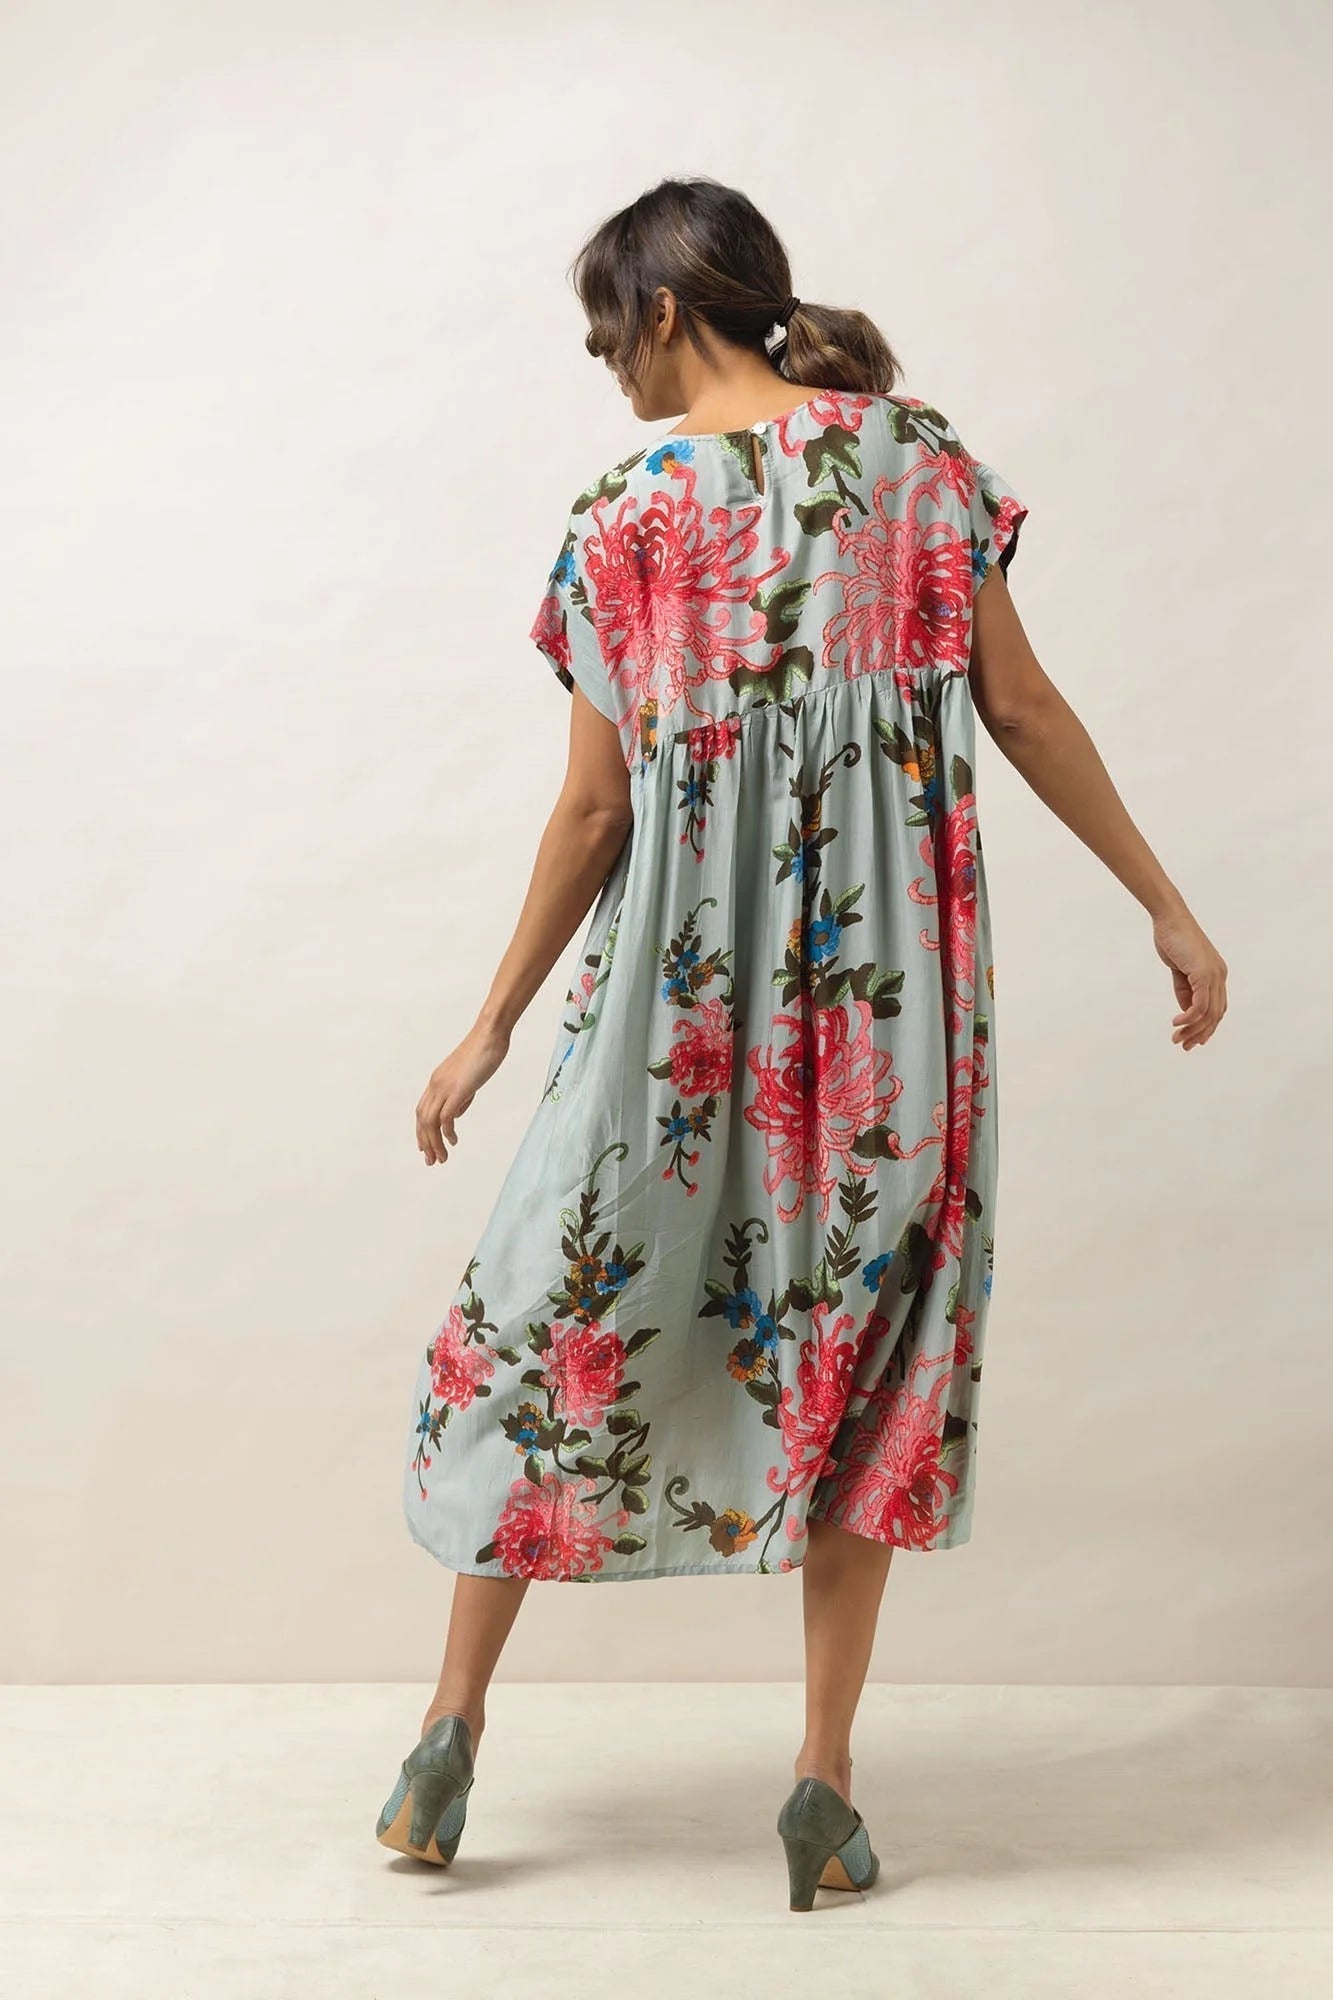 Chrysanthemum Aqua Pleat Dress - The Nancy Smillie Shop - Art, Jewellery & Designer Gifts Glasgow